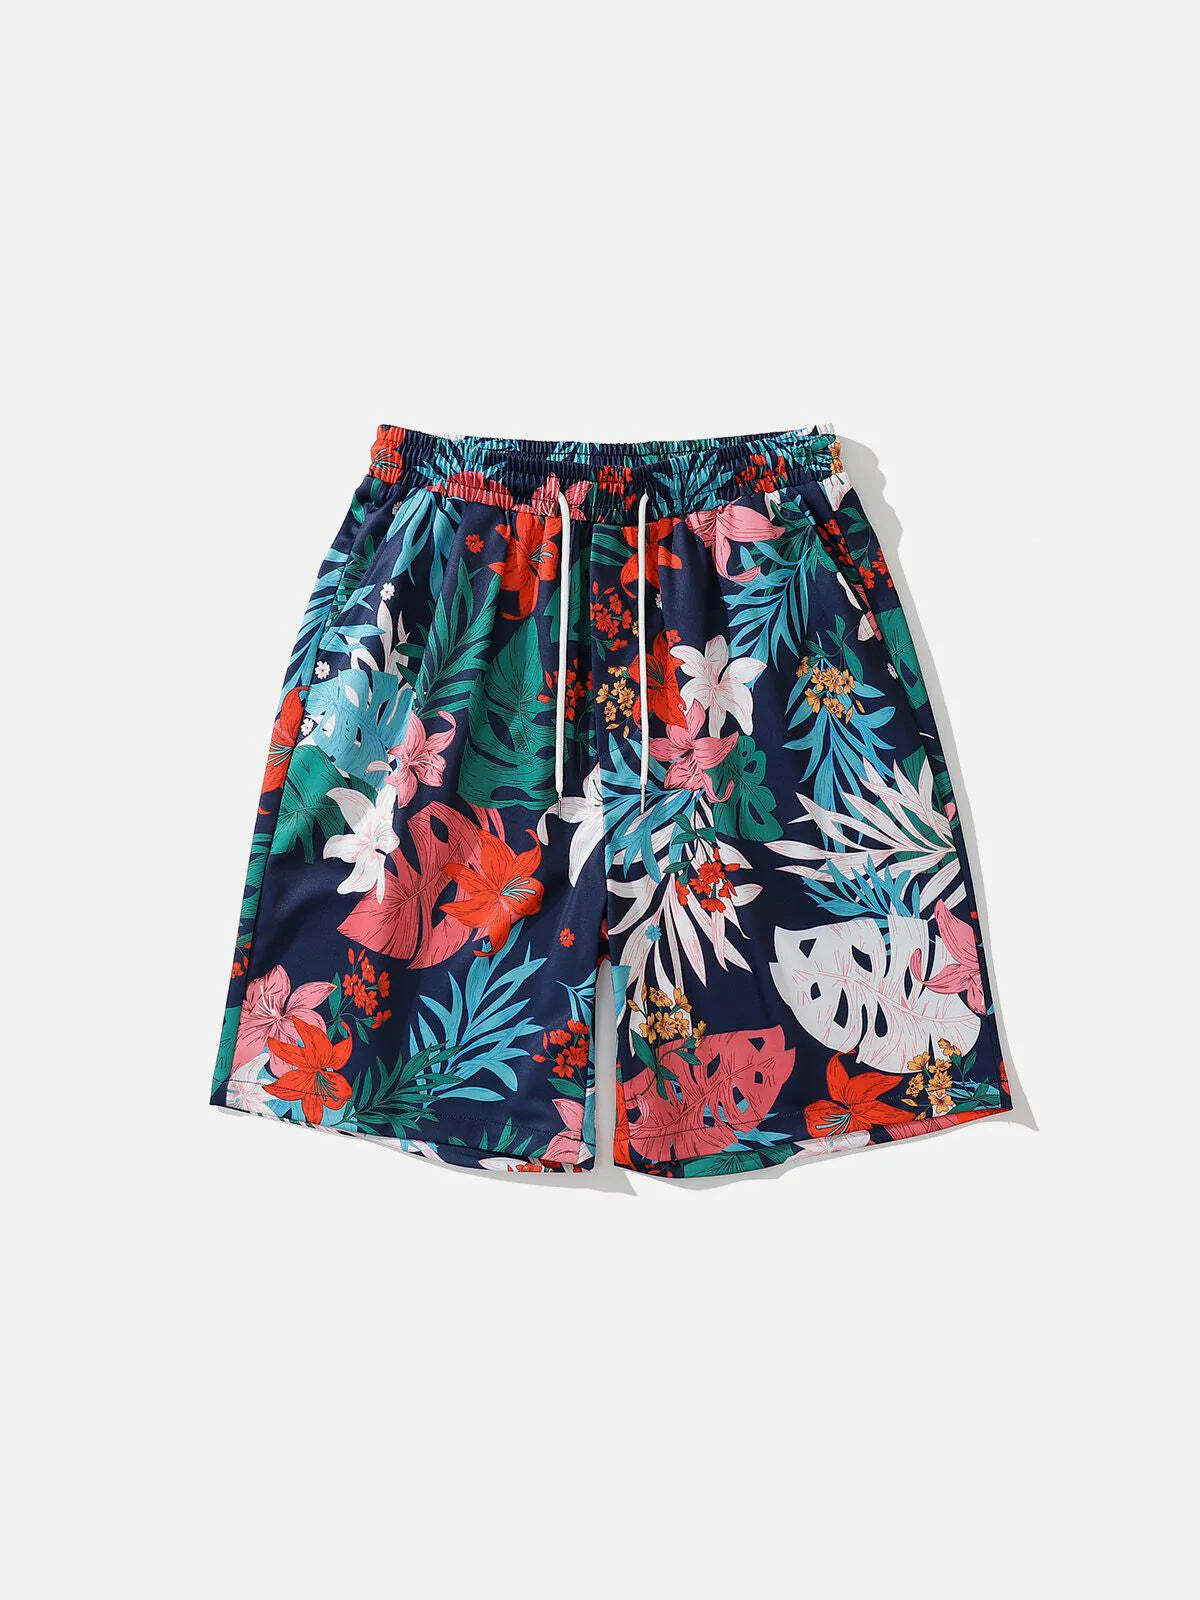 botanical print shorts vibrant natureinspired streetwear 8165